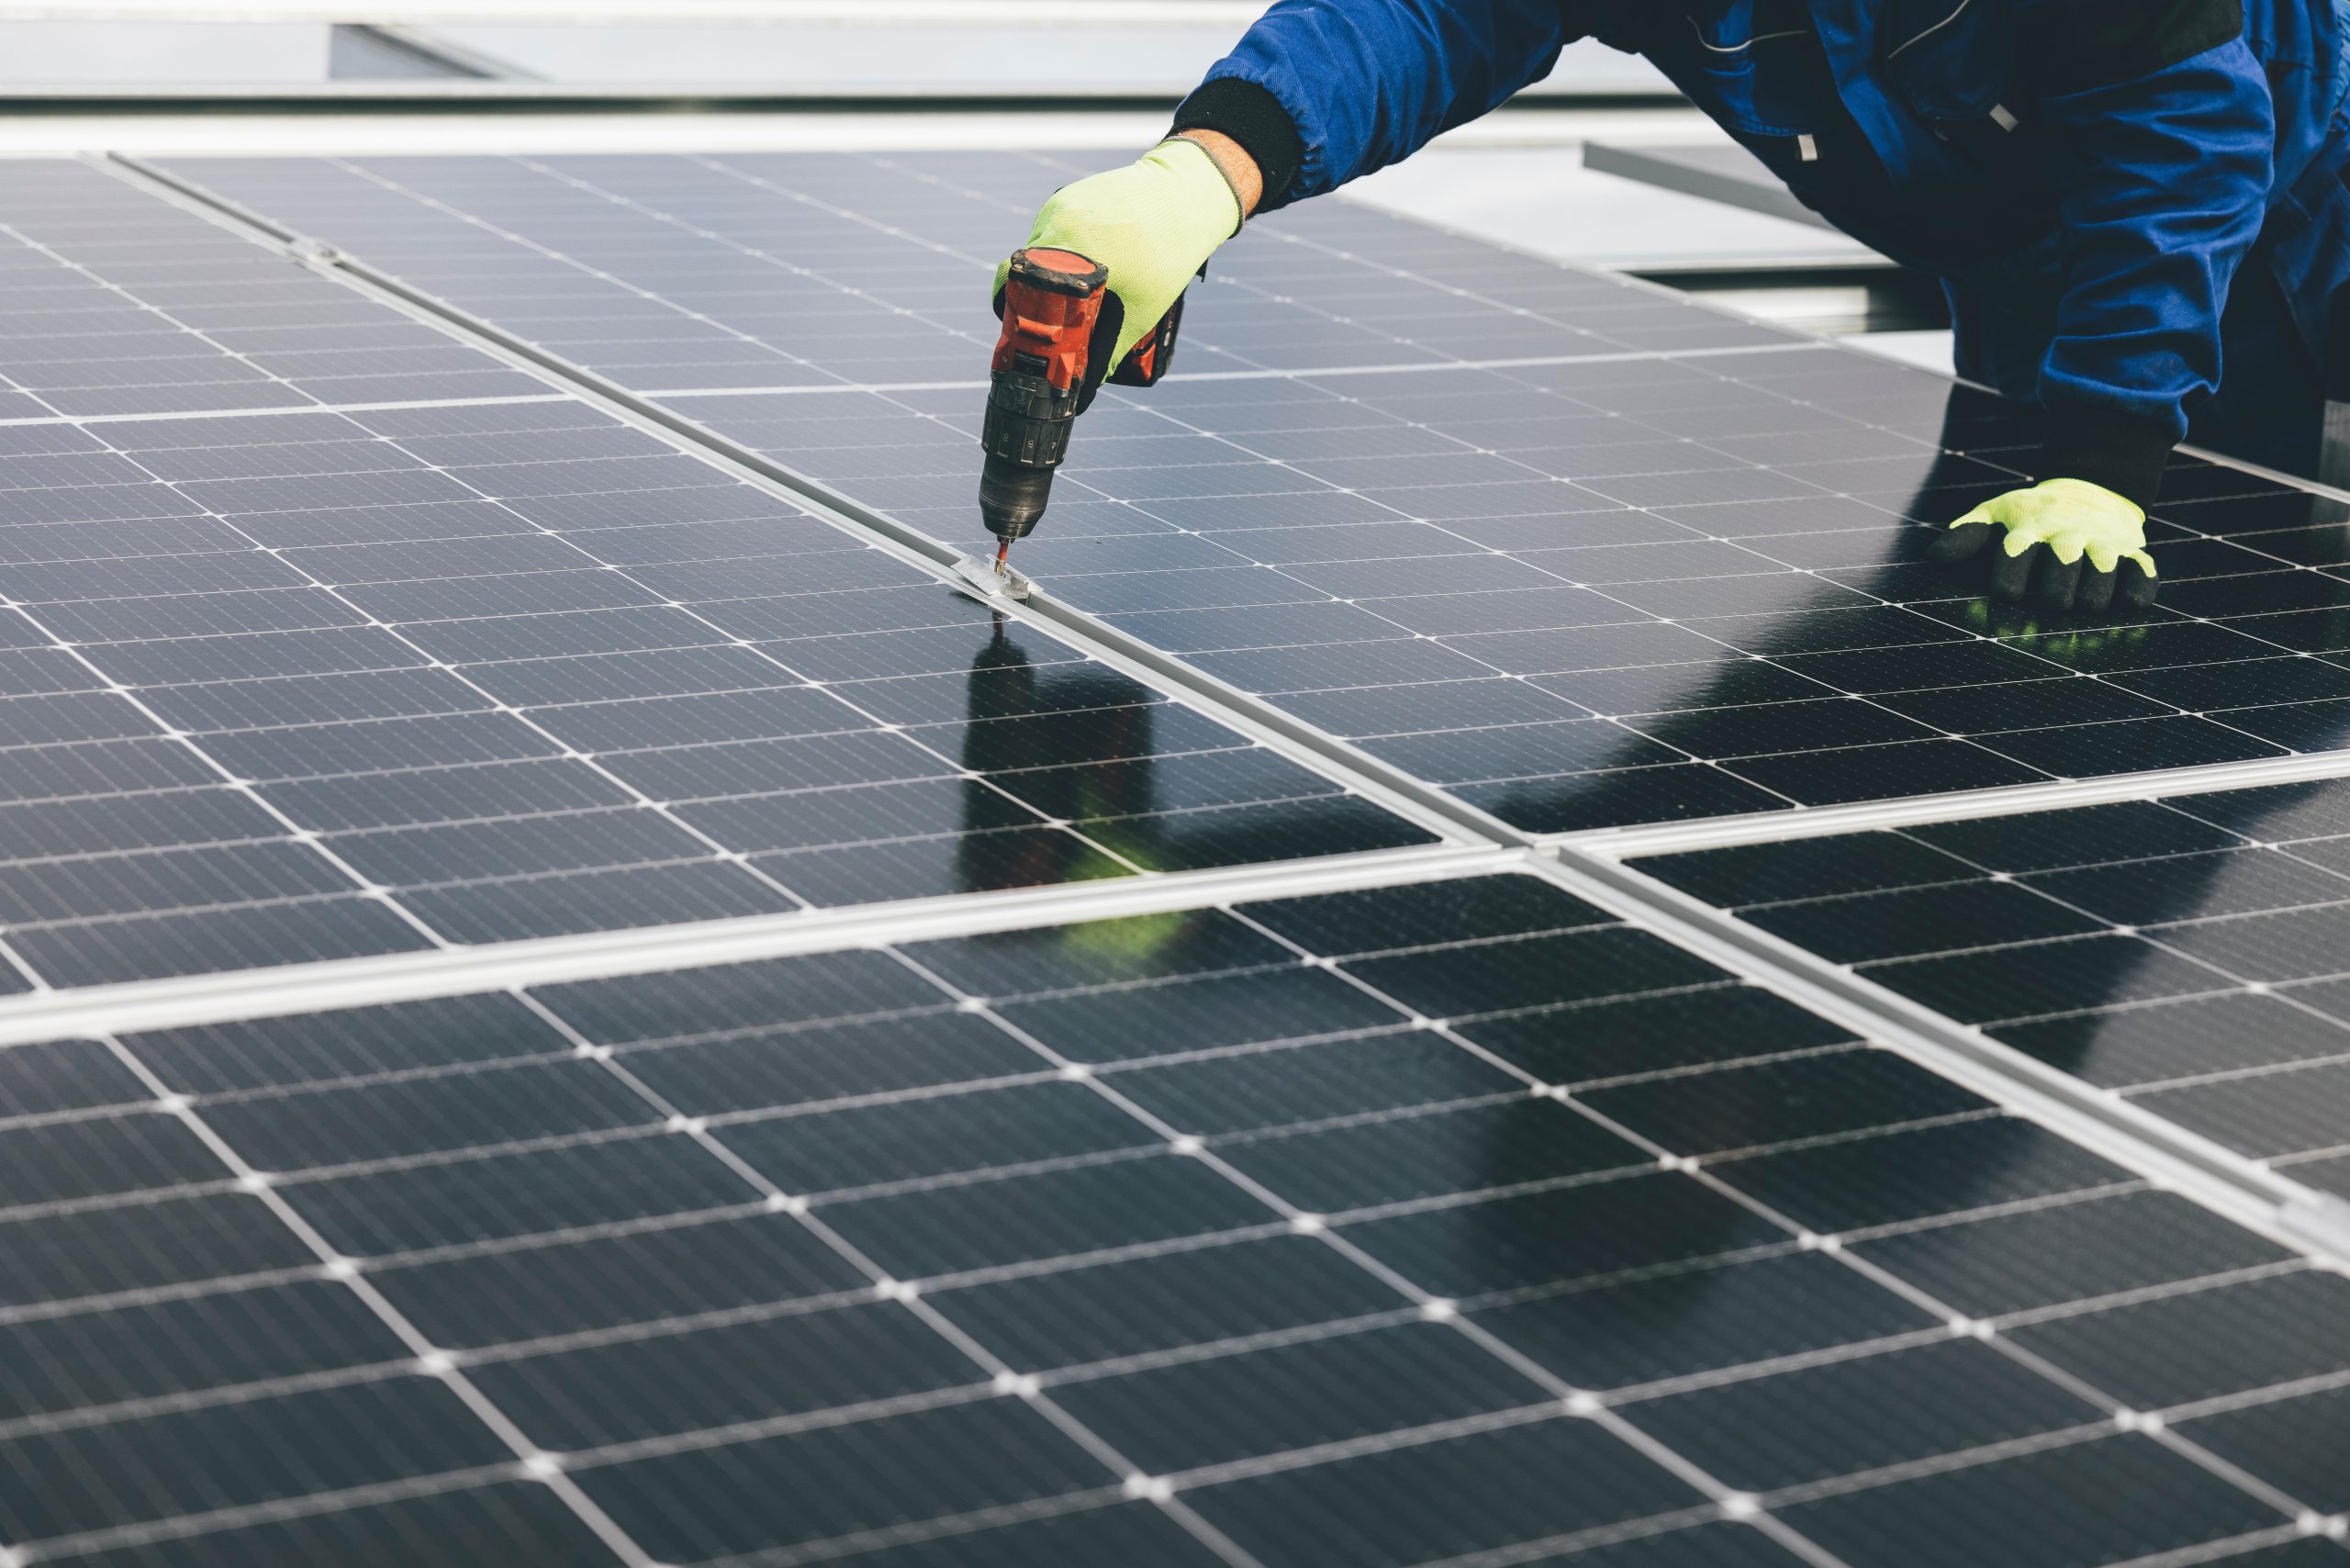 Empresas de energia solar: como escolher? - eCycle